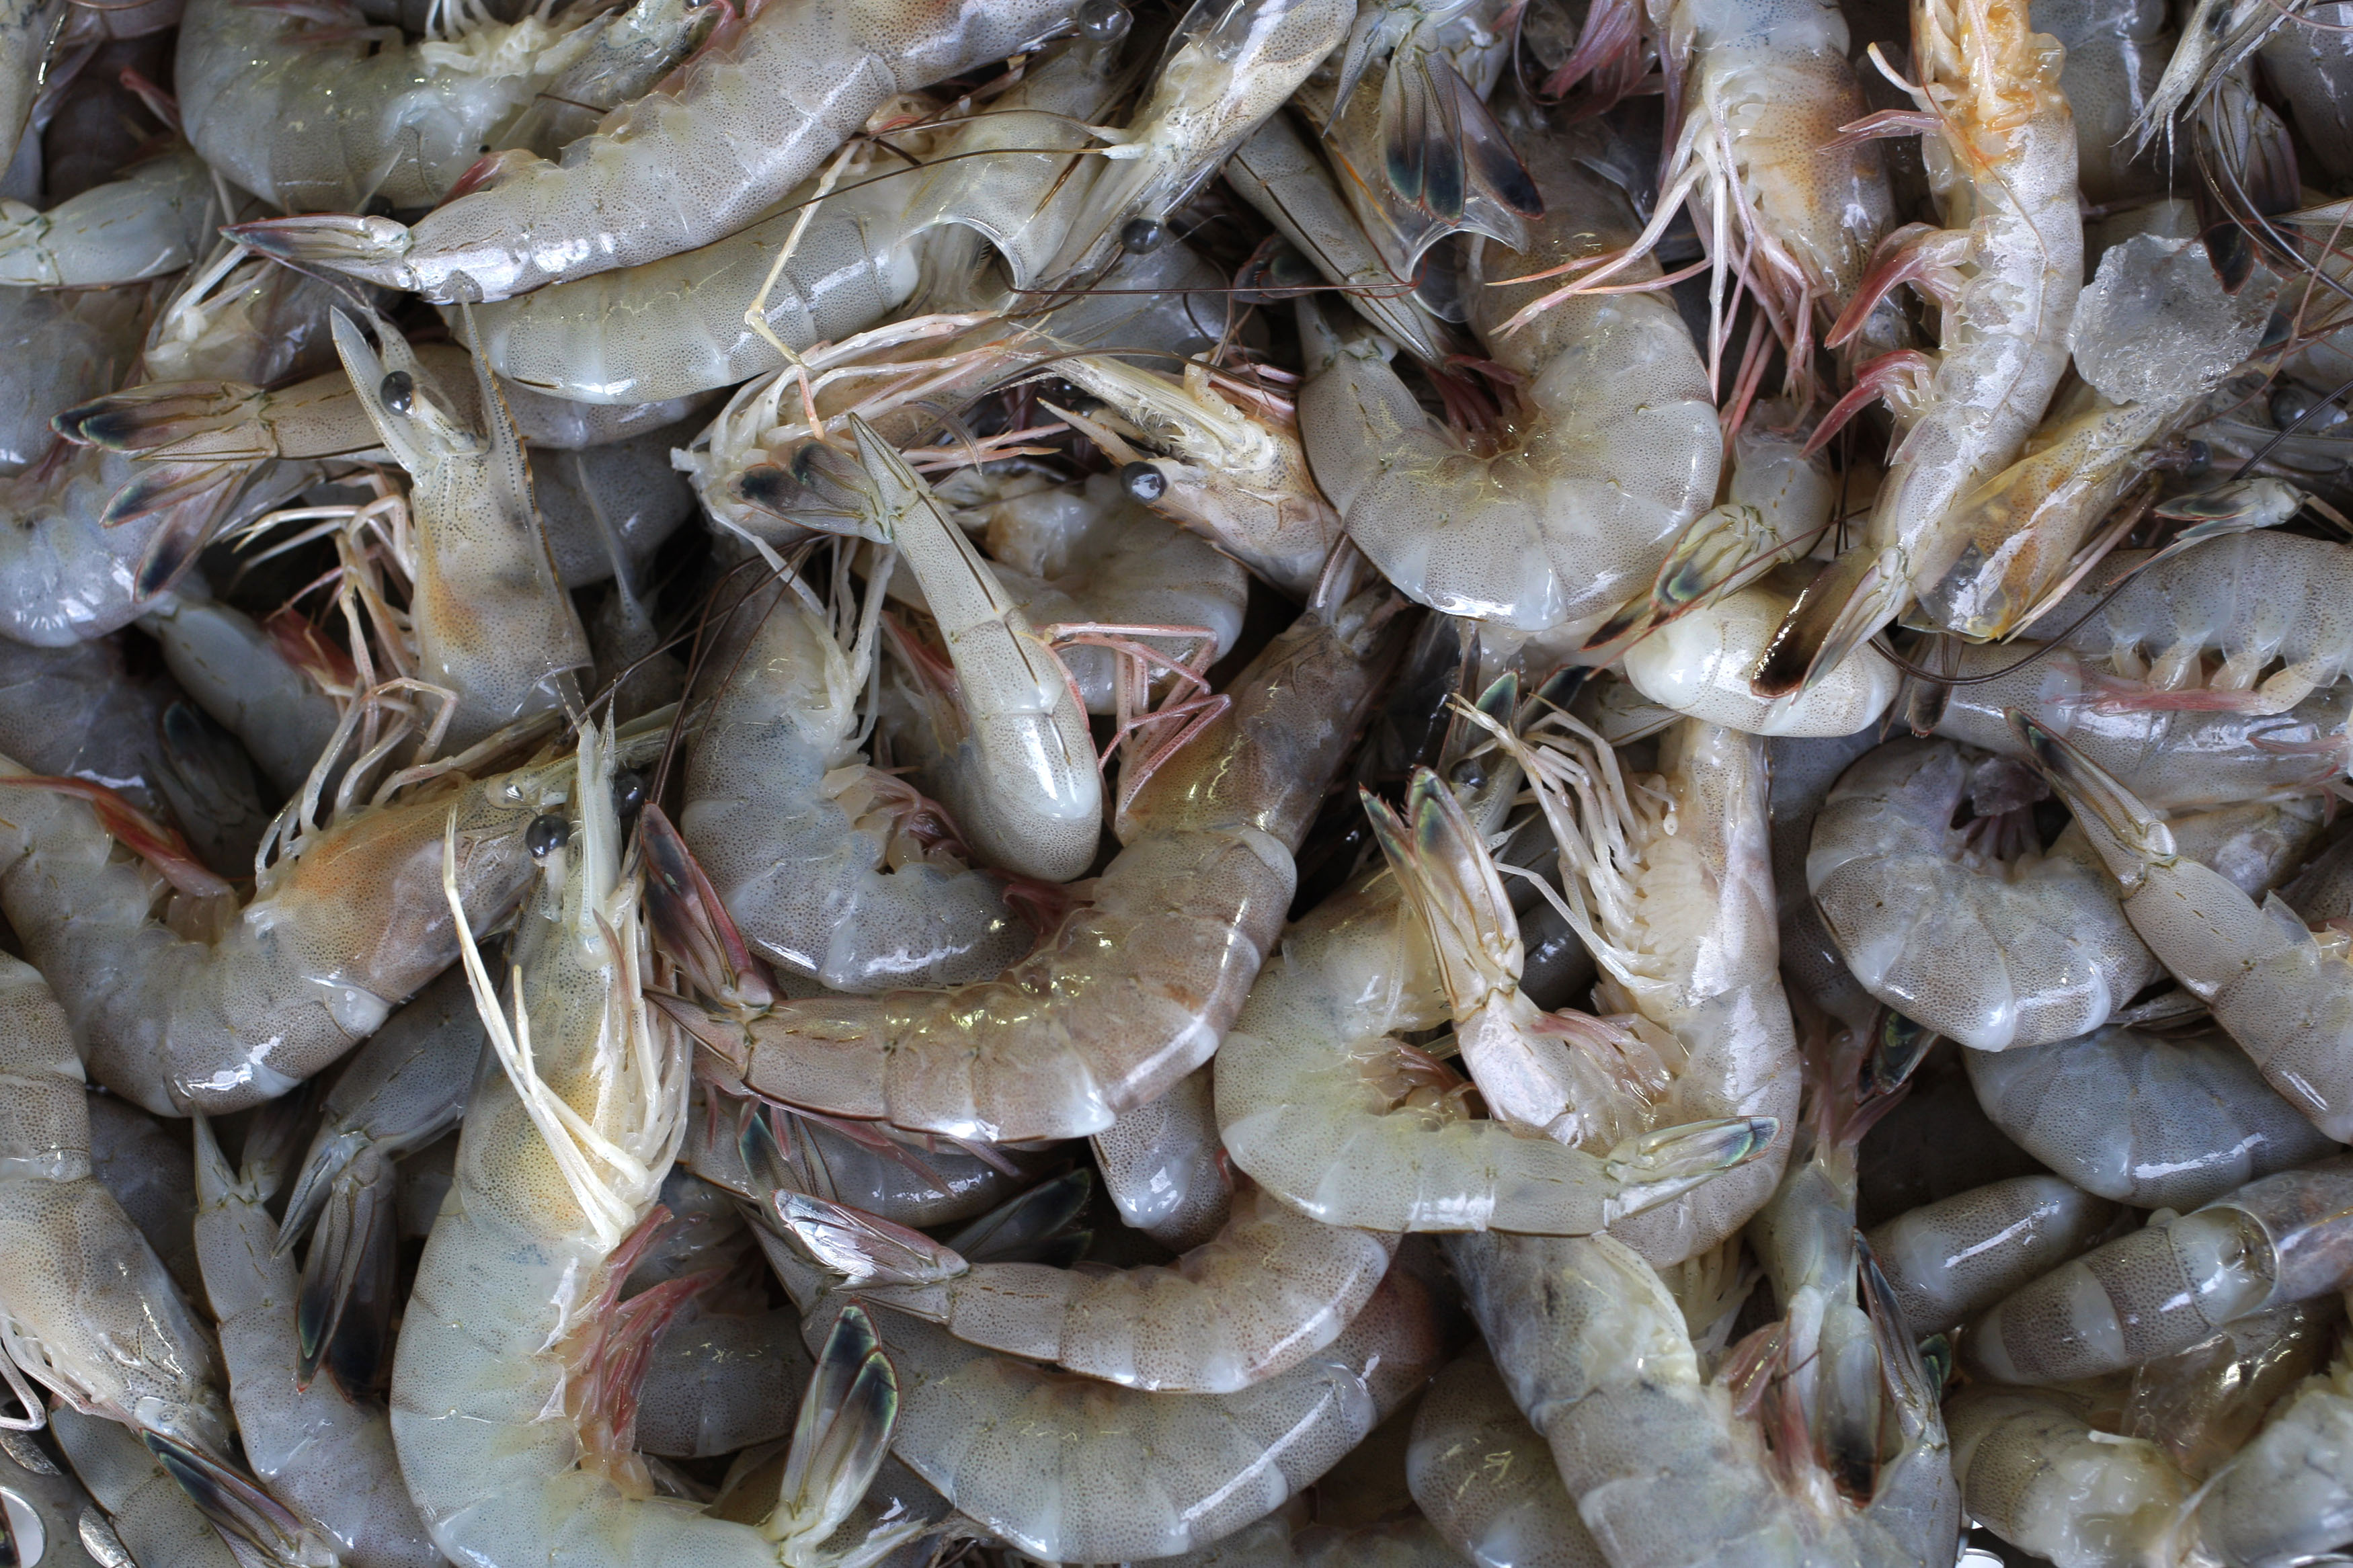 Costa Rica's Shrimp Trawling Study Questioned 